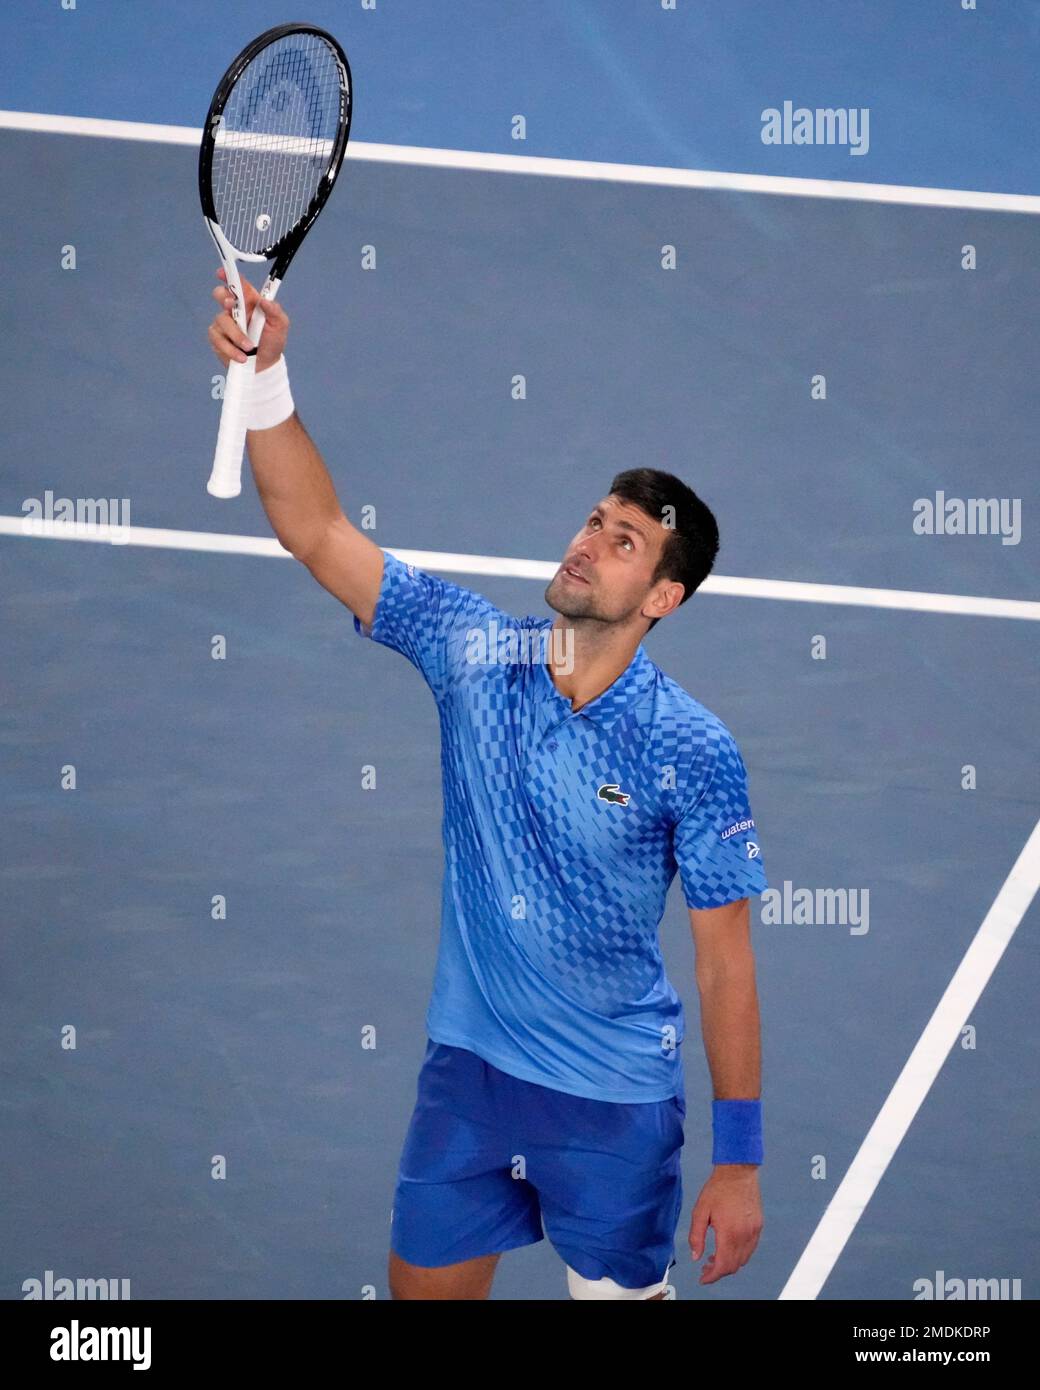 Novak Djokovic of Serbia reacts after defeating Alex de Minaur of Australia in their fourth round match at the Australian Open tennis championship in Melbourne, Australia, Monday, Jan